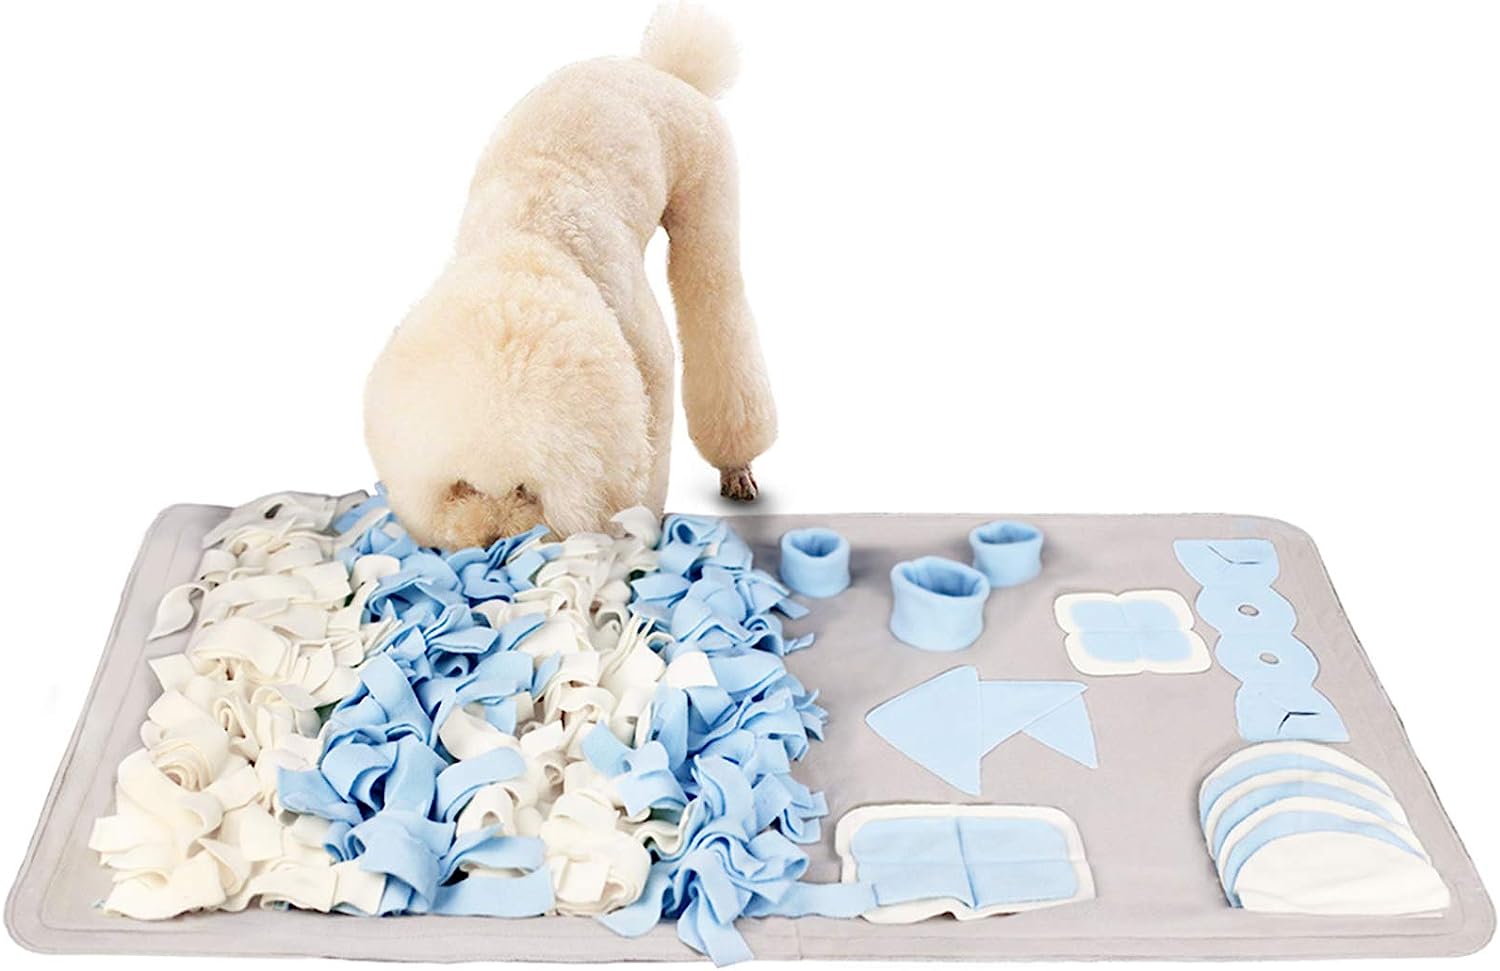 Pet Arena PET ARENA Adjustable Snuffle mat for Dogs, cats - Dog